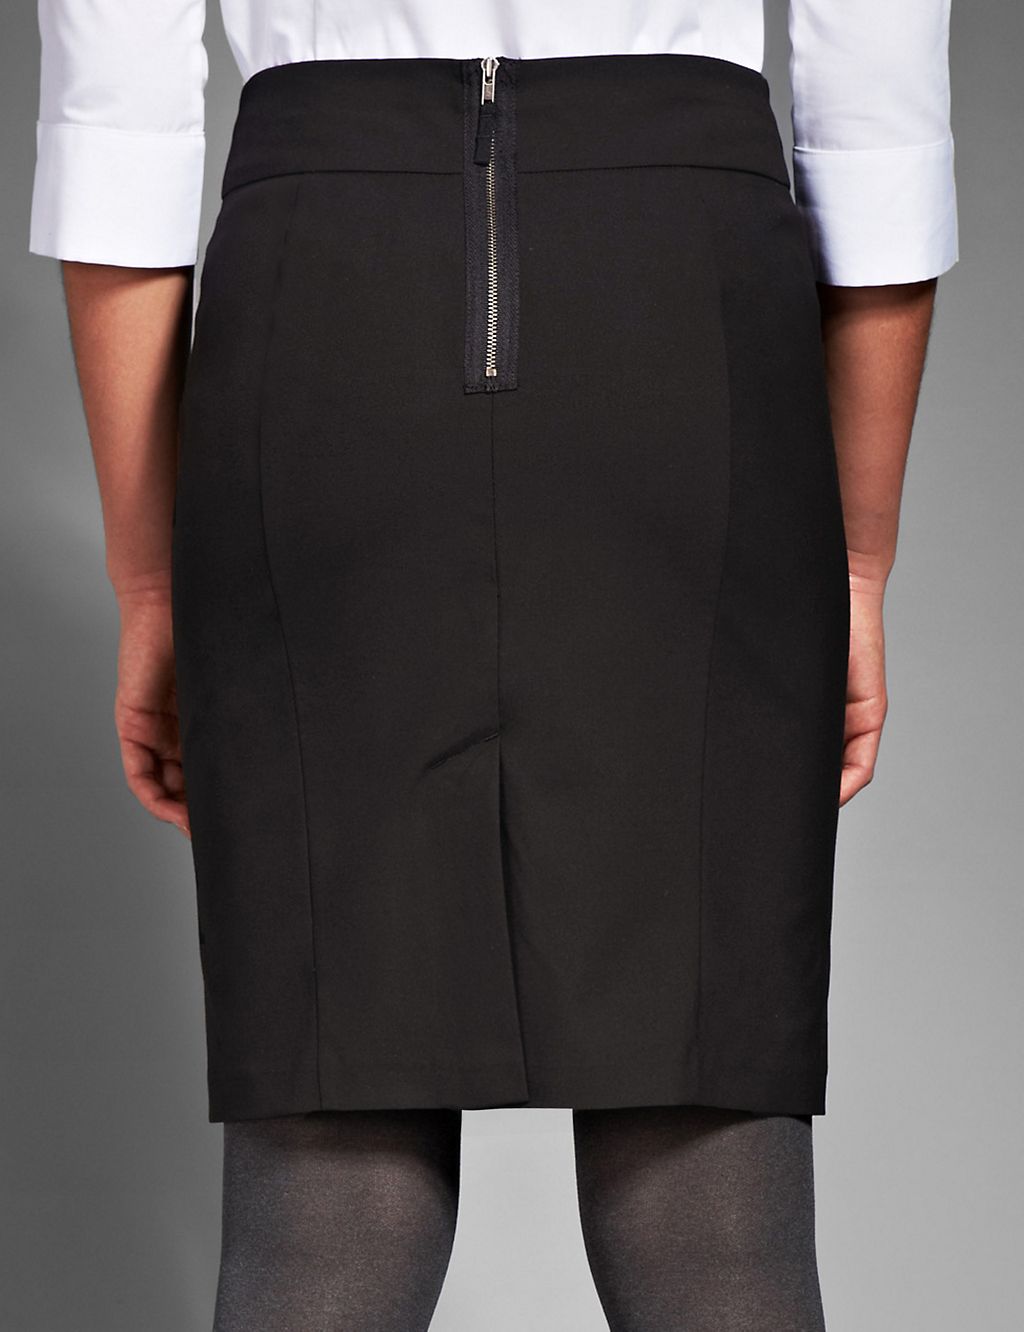 Senior Girls' Crease Resistant Pencil Skirt with Stormwear™ (Older Girls) 4 of 4